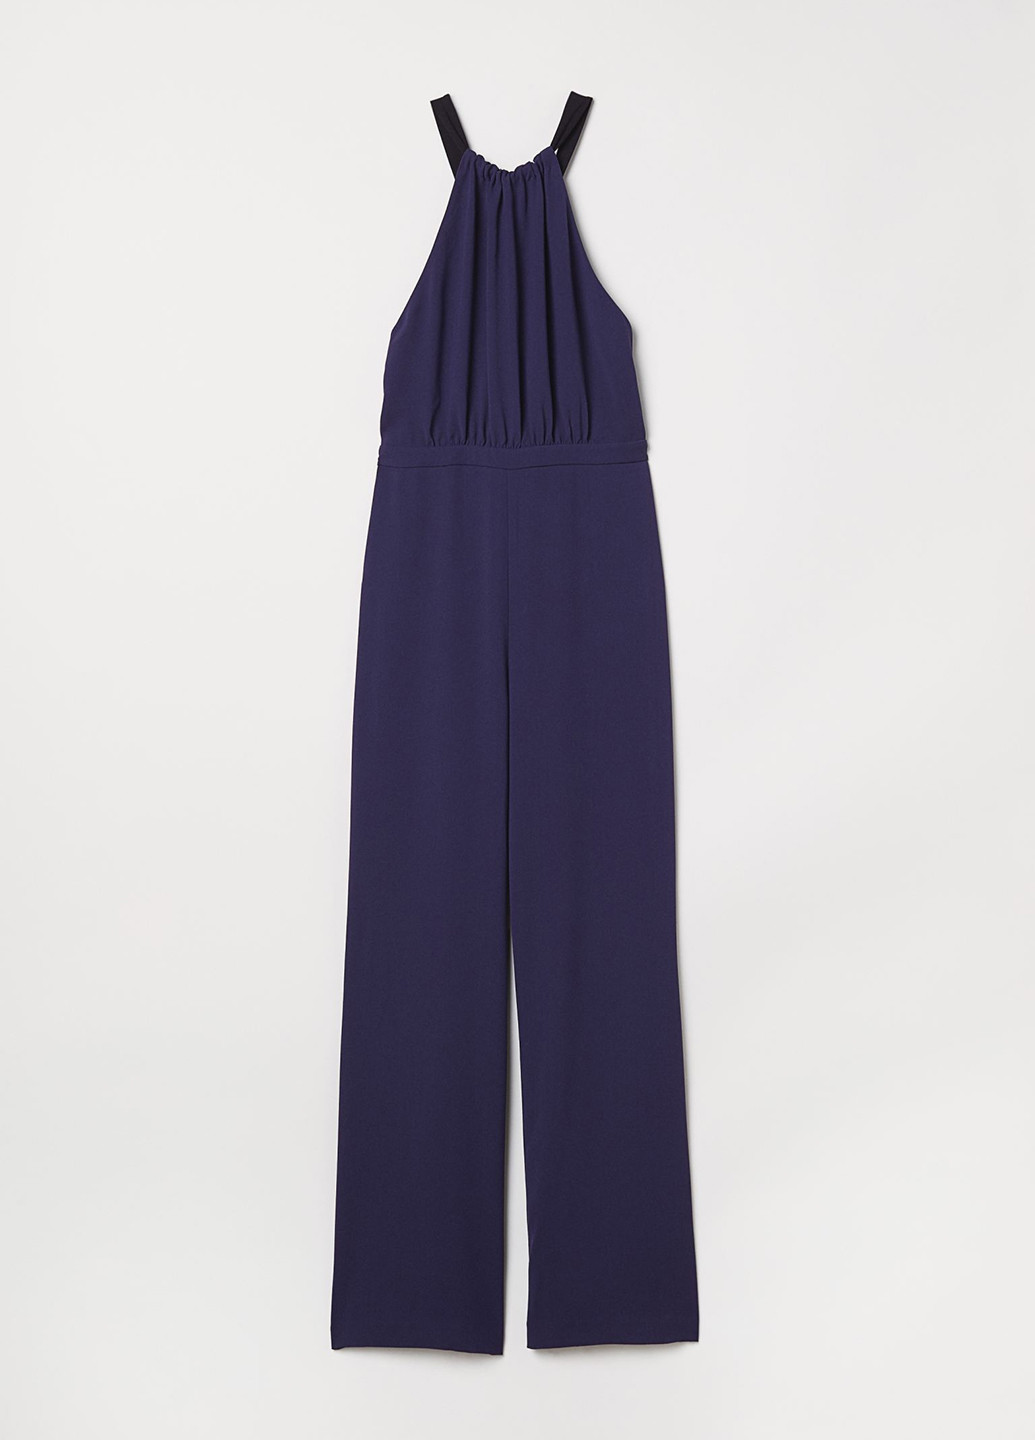 Комбинезон H&M комбинезон-брюки однотонный тёмно-синий кэжуал креп, полиэстер